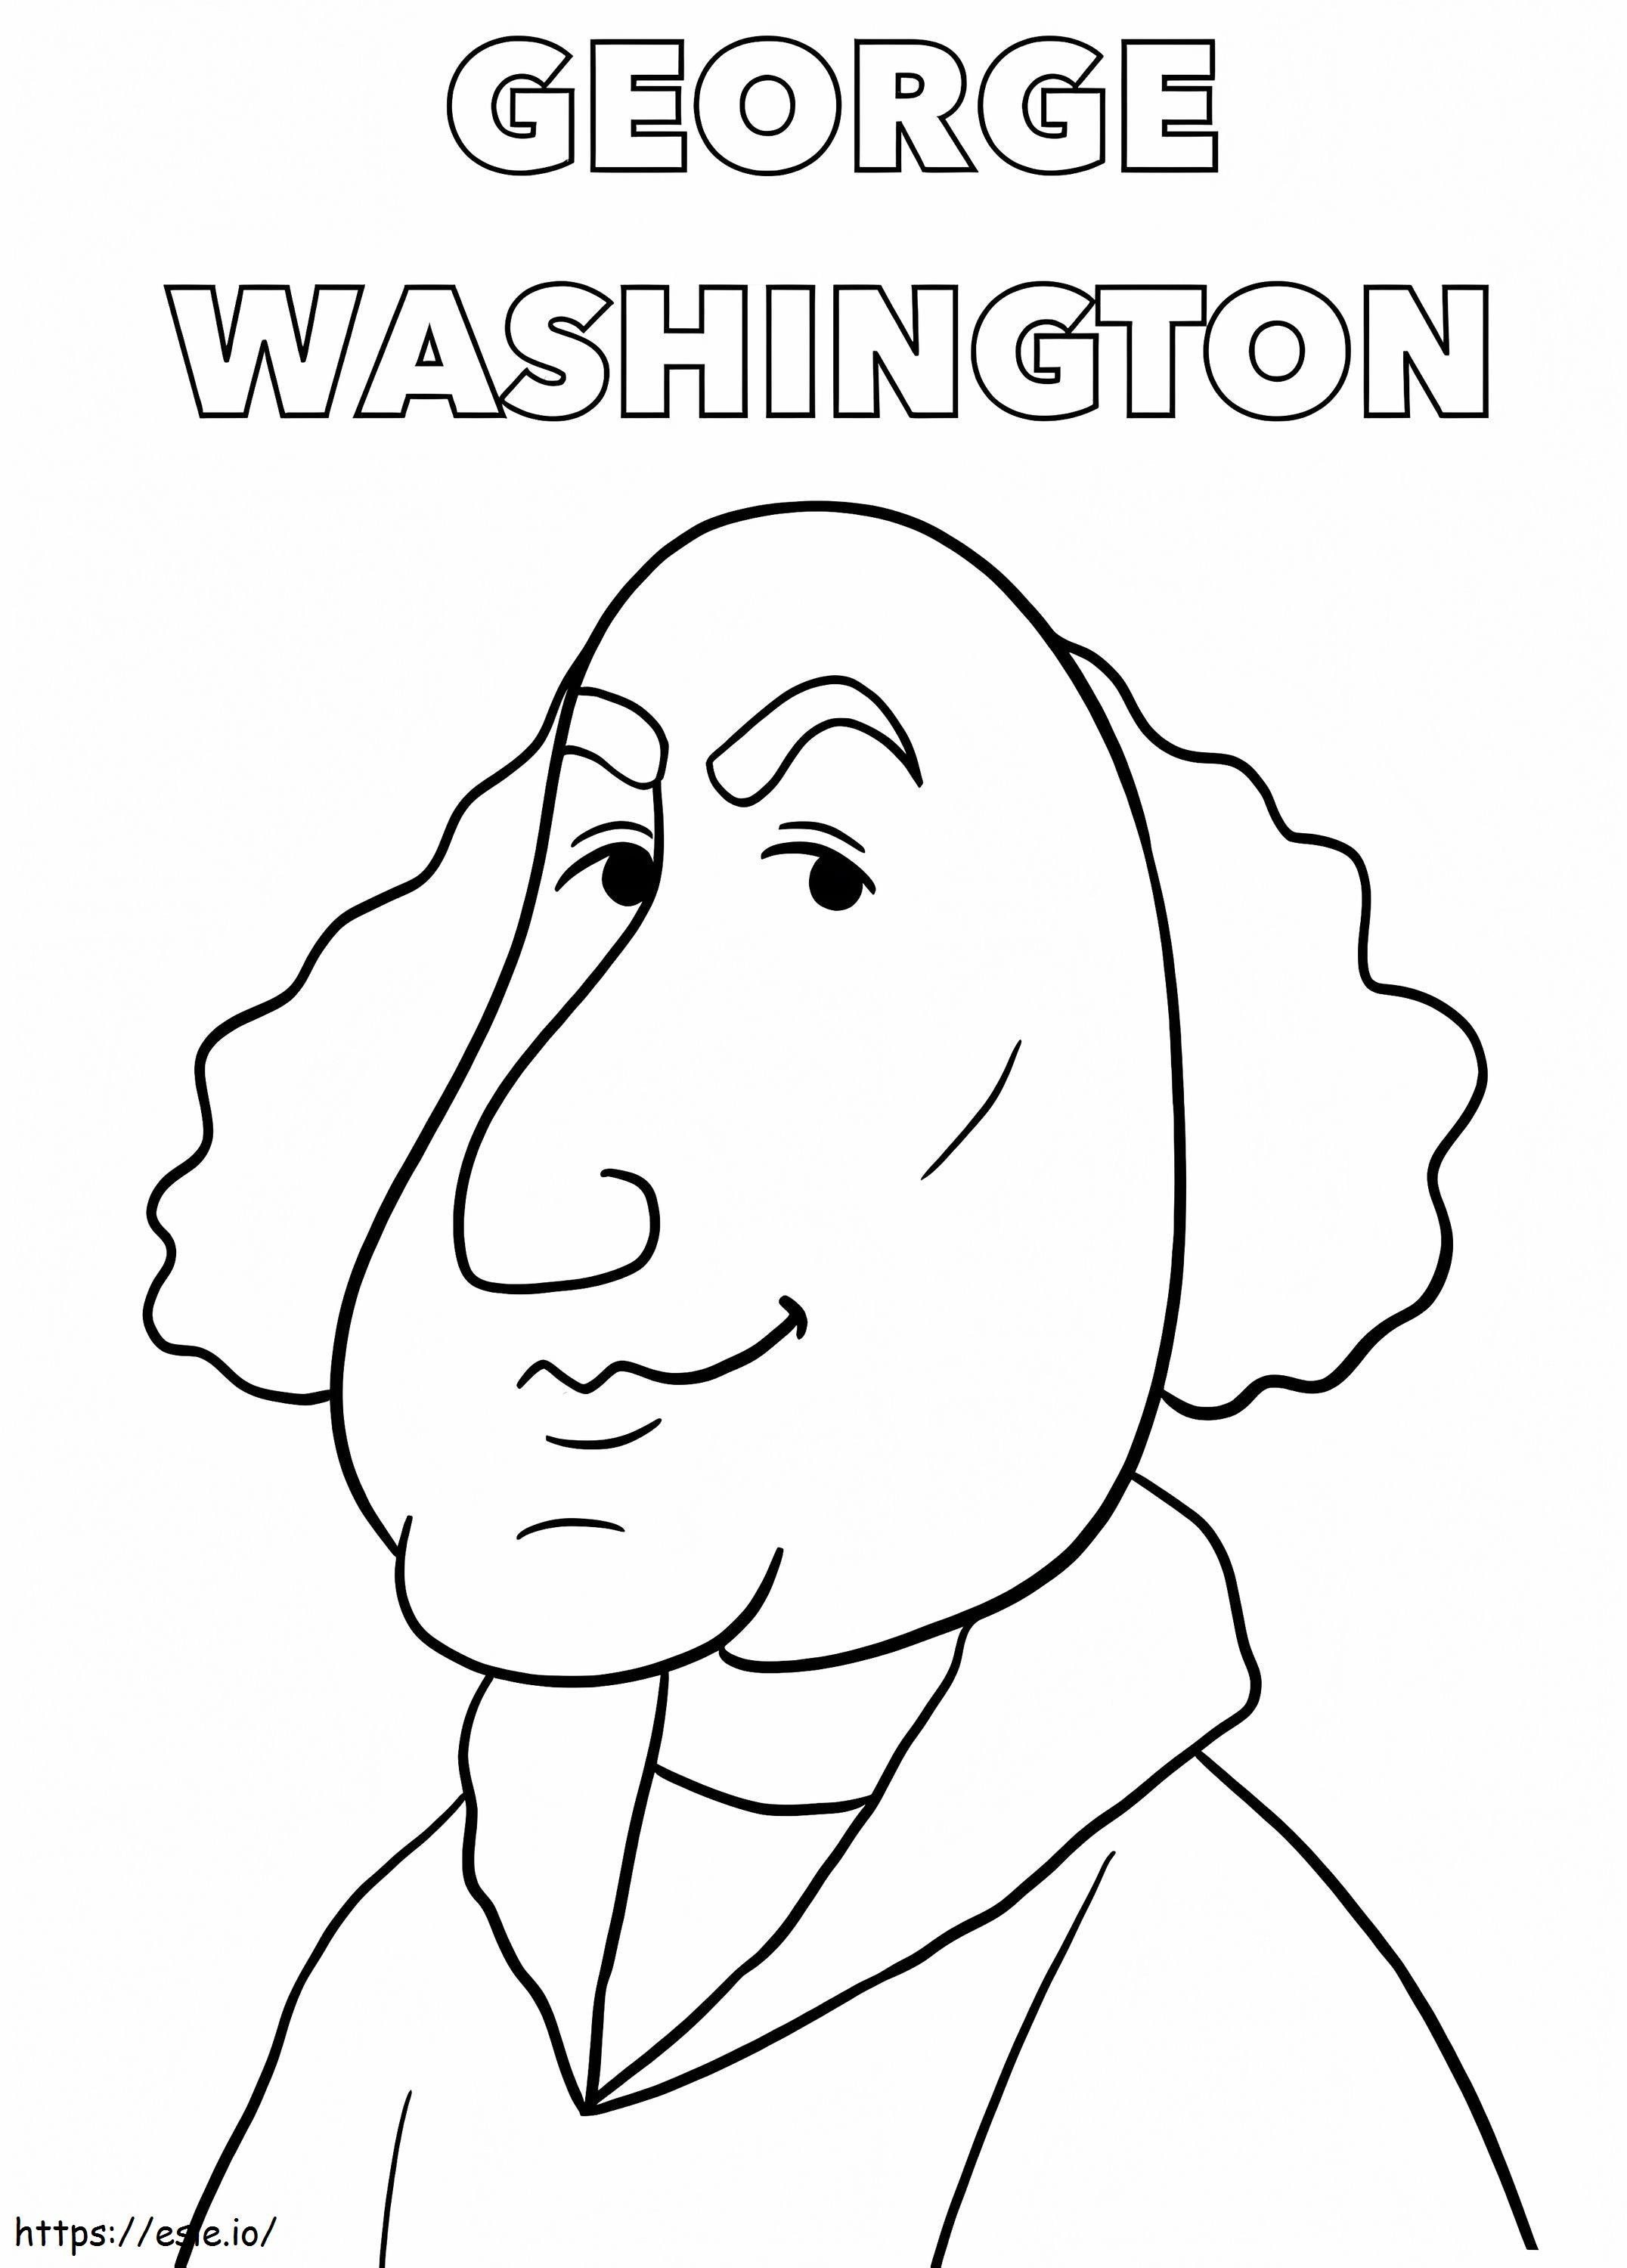 George Washington 22 ausmalbilder